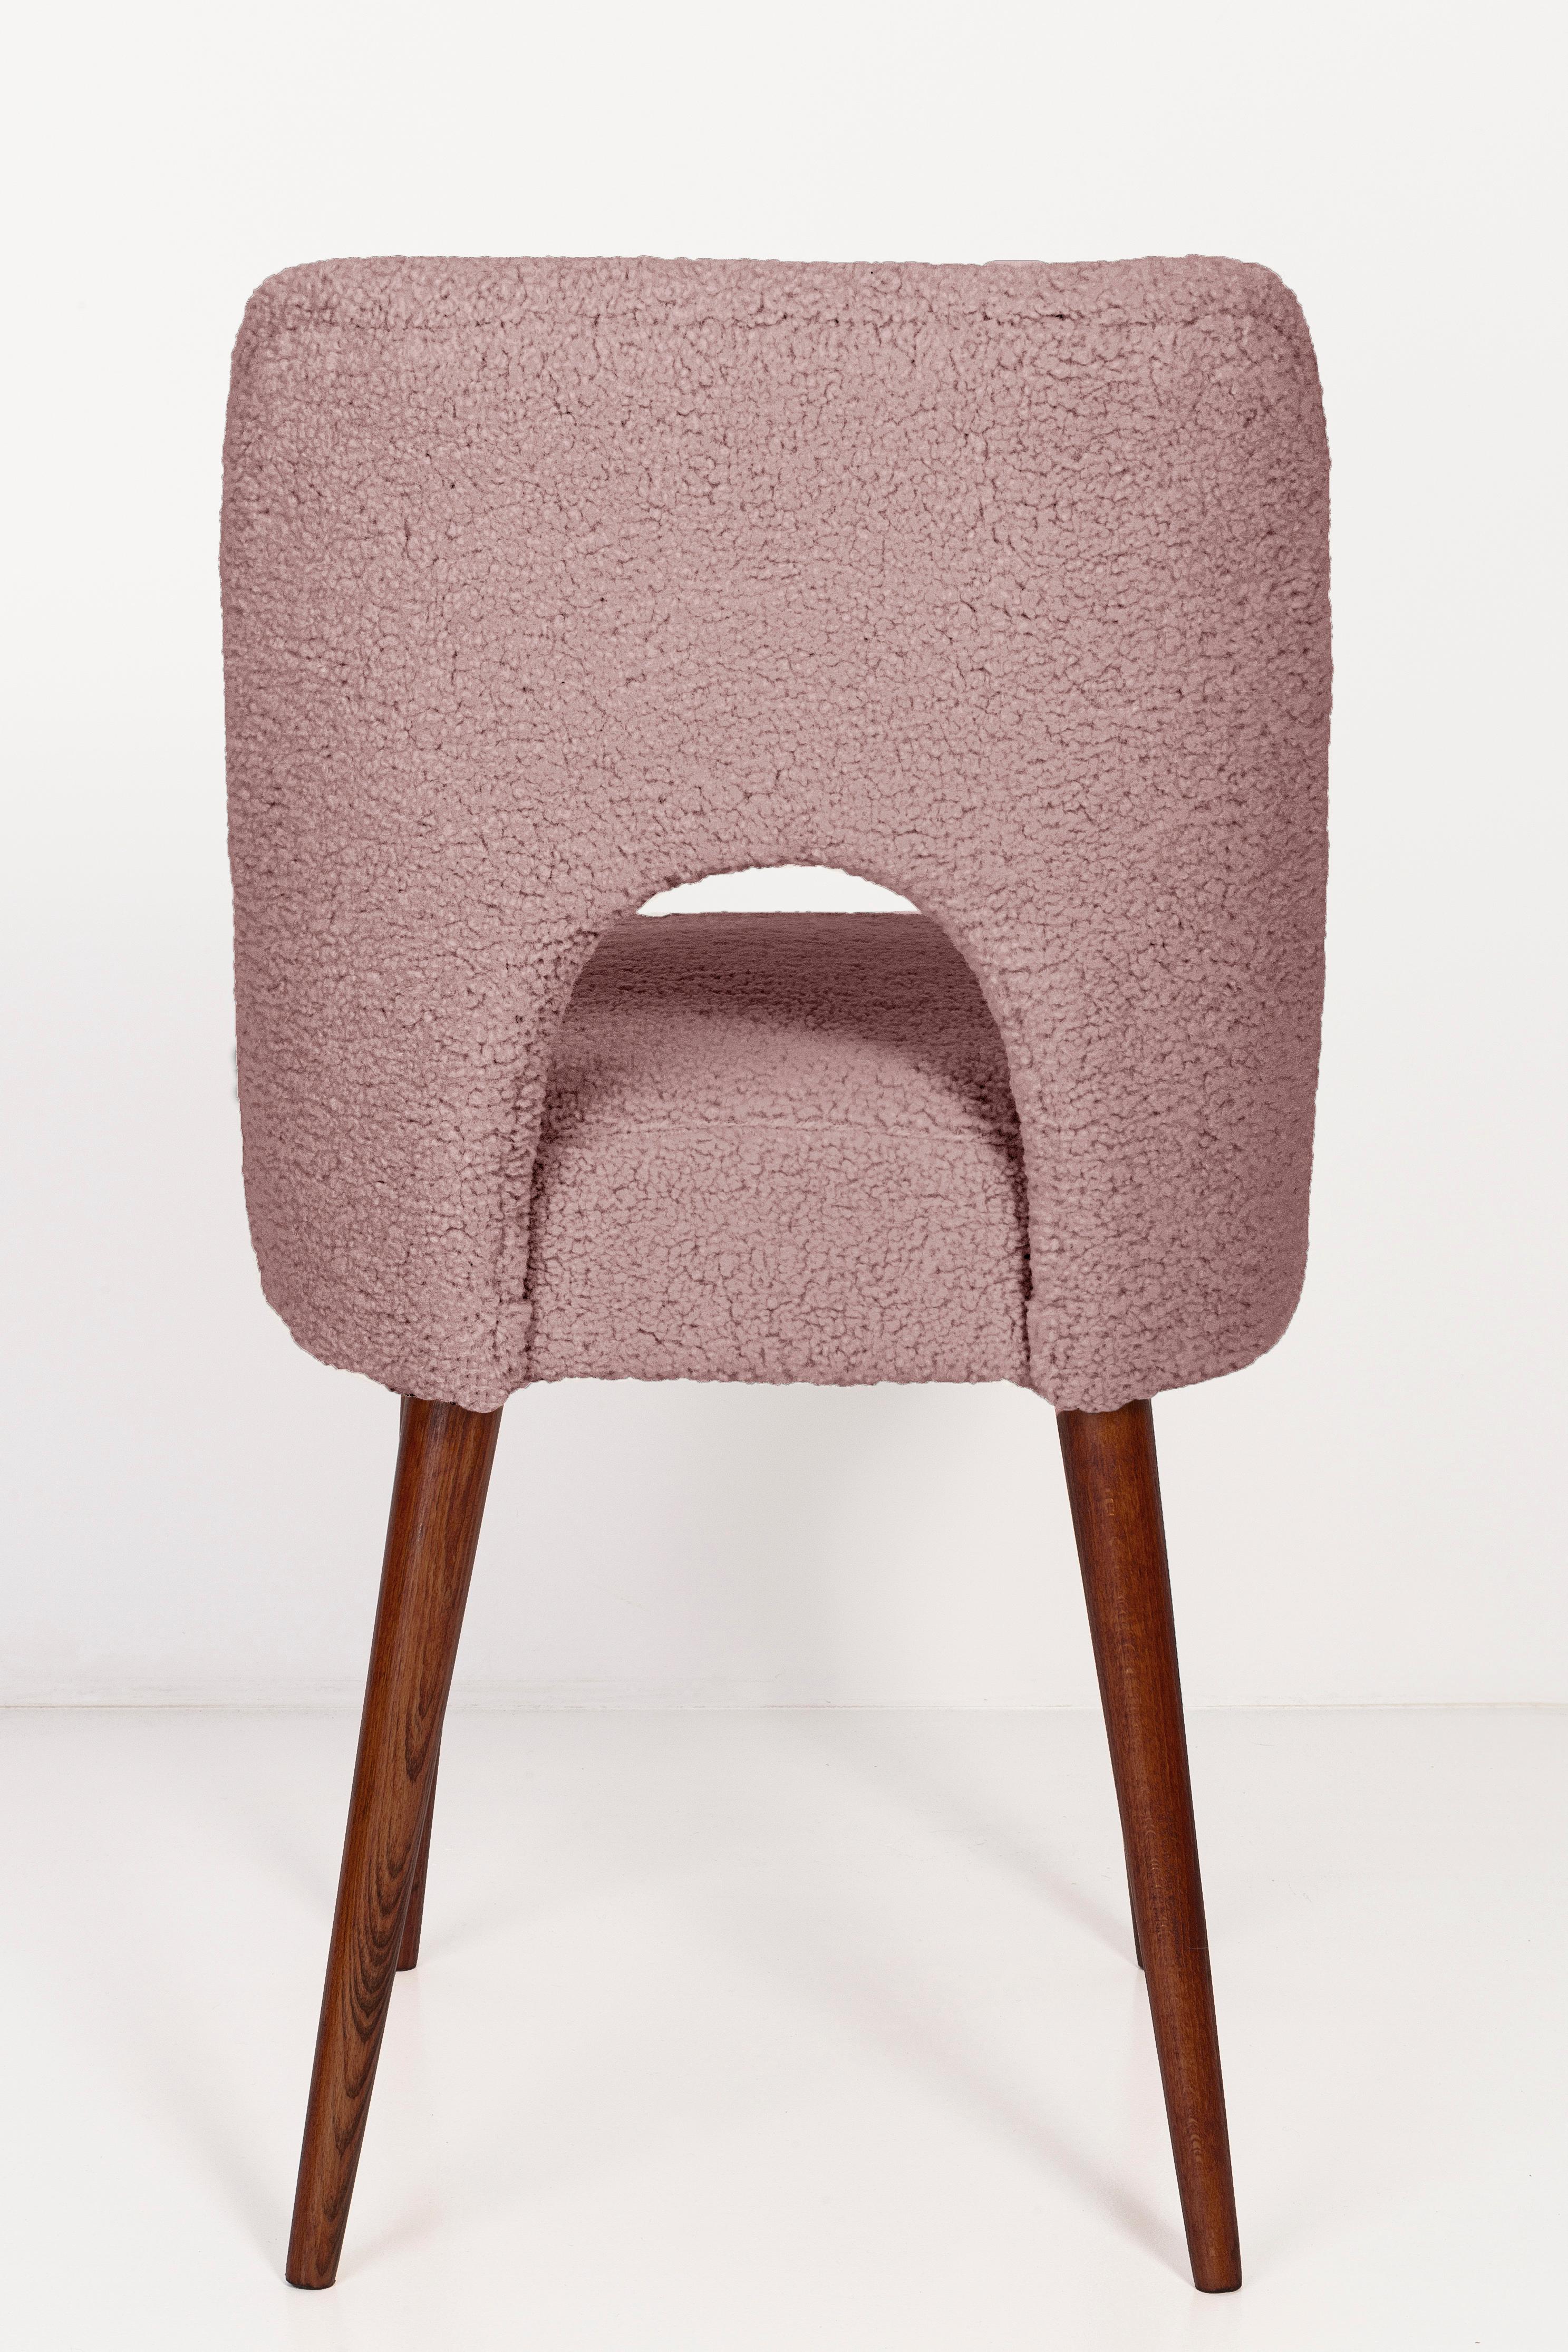 Sechs rosa Boucle-Stuhlstühle „Shell“, Polen, 1960er Jahre (20. Jahrhundert) im Angebot